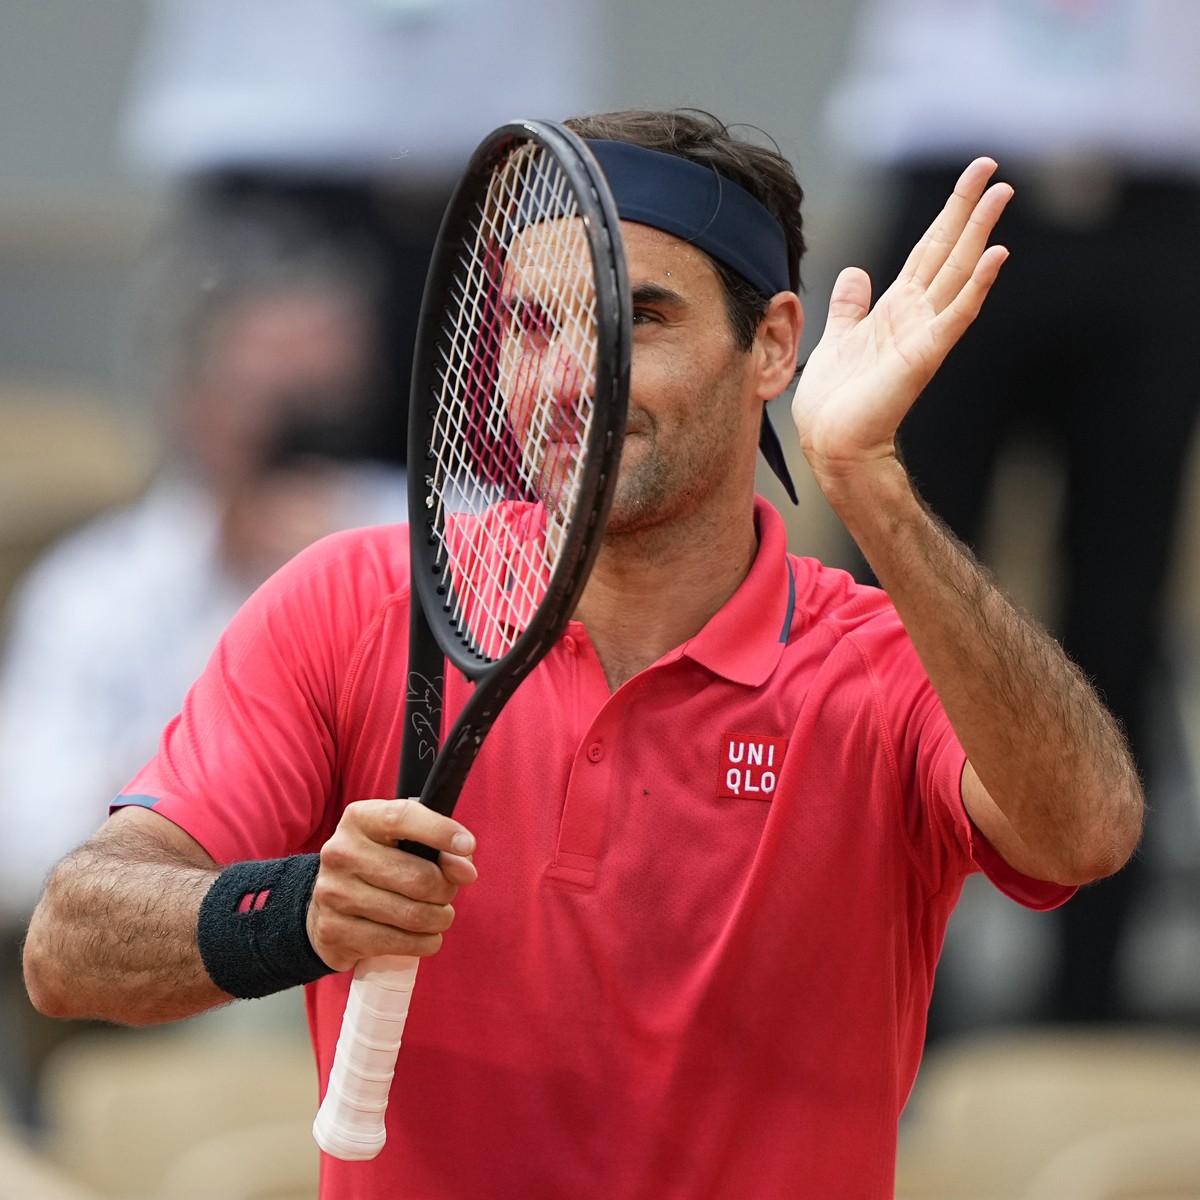 French Open 2021 Roger Federer gegen Marin Cilic im Liveticker